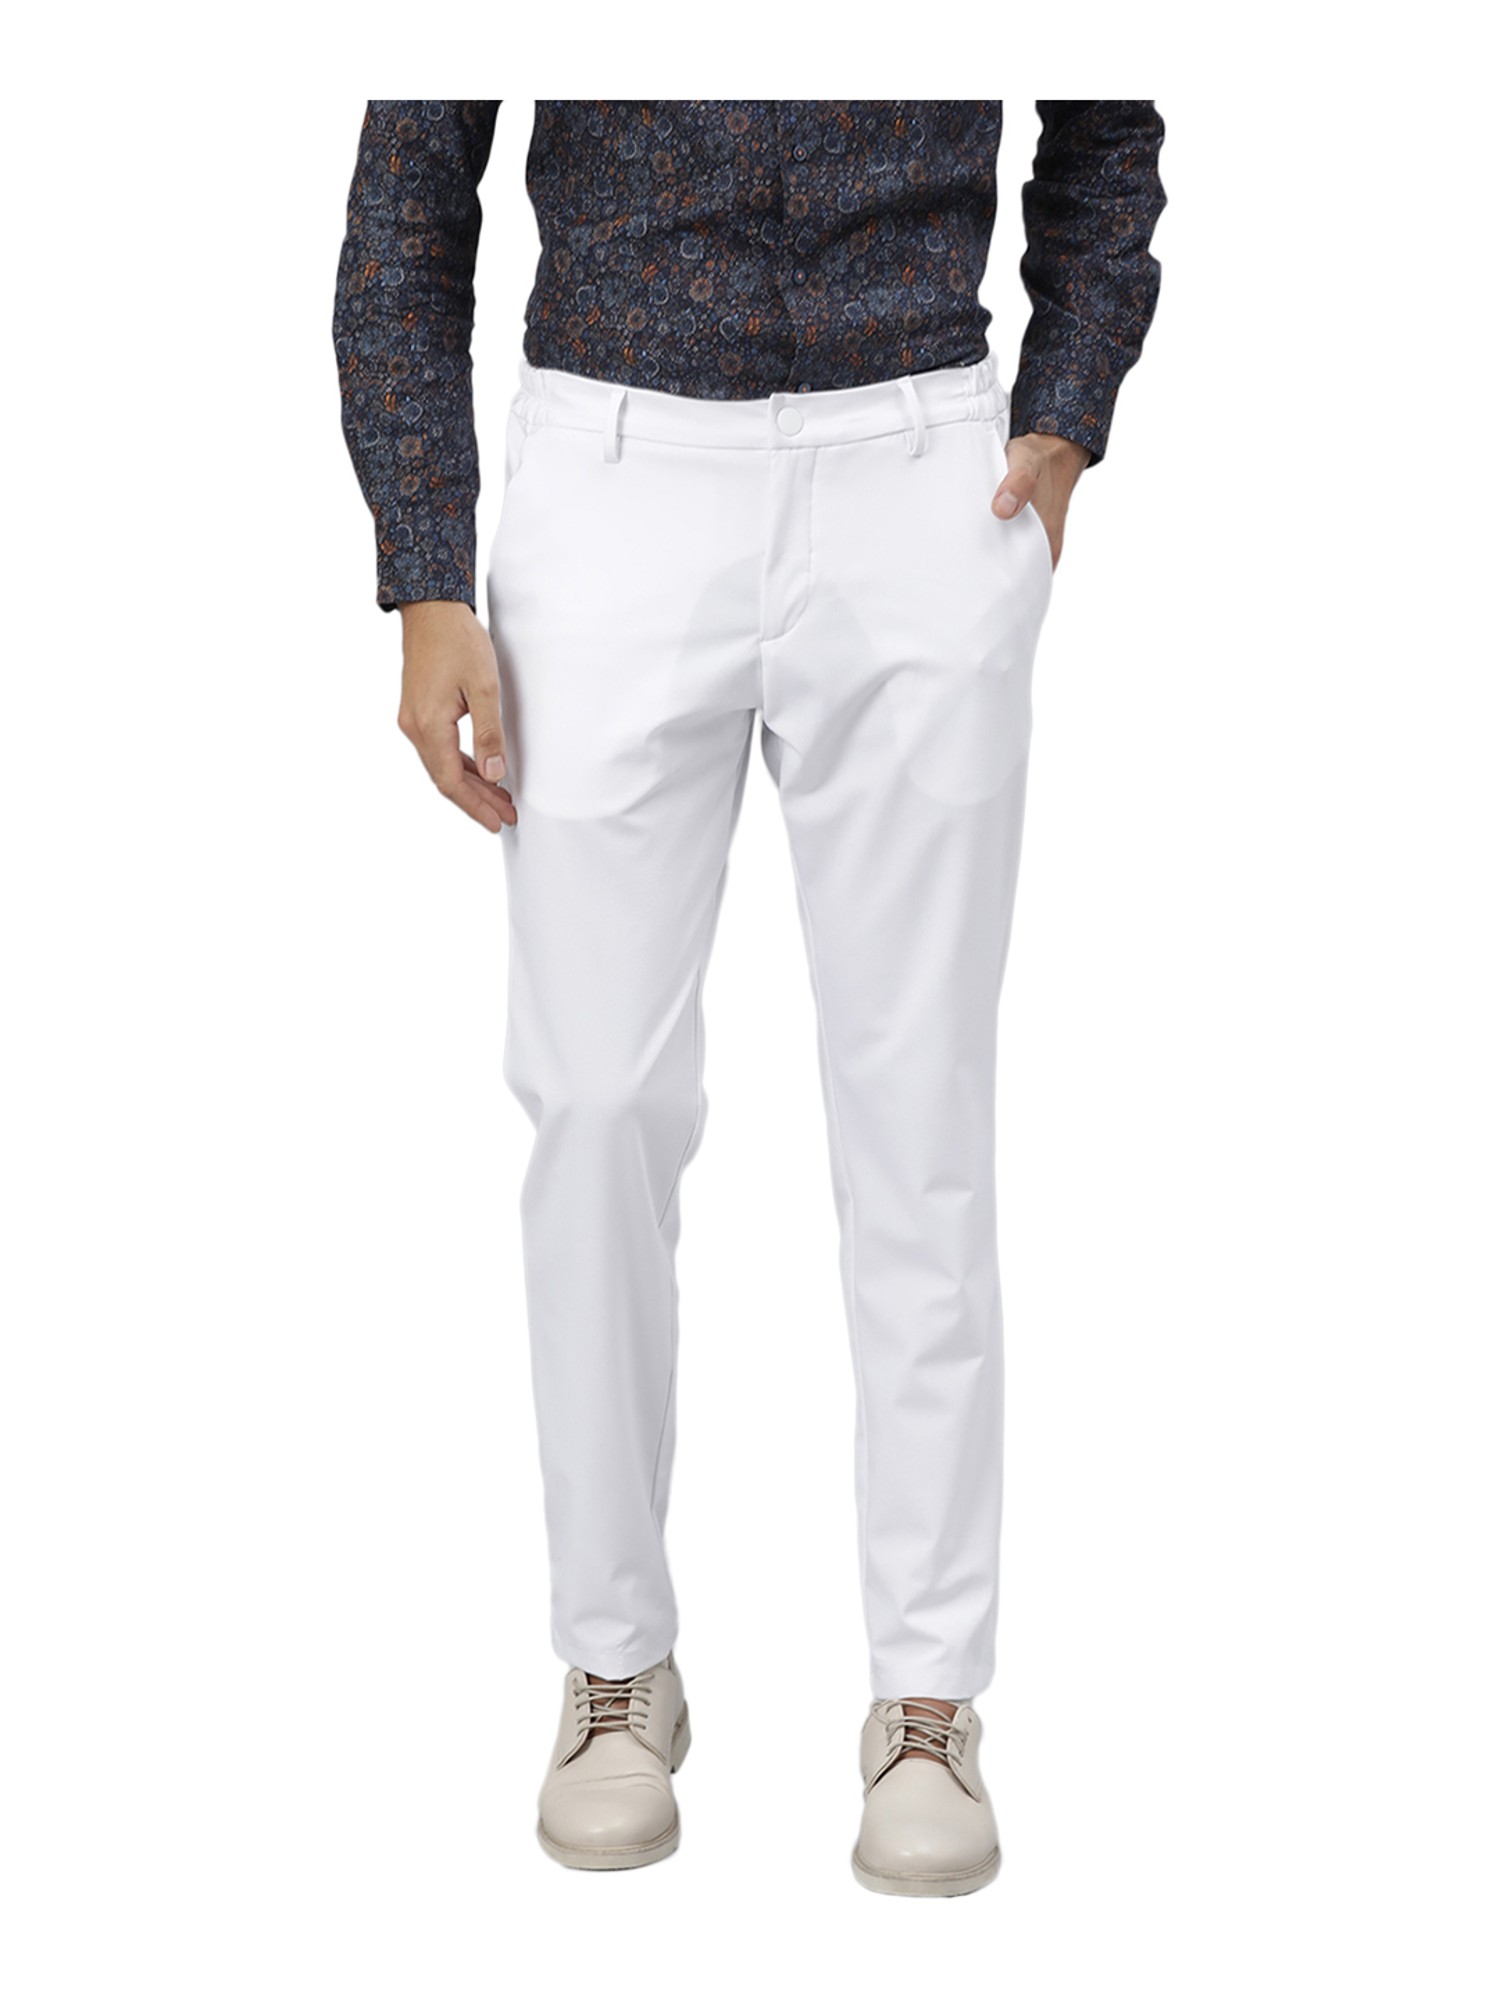 Buy Linen Club Beige Regular Fit Flat Front Trousers for Mens Online   Tata CLiQ